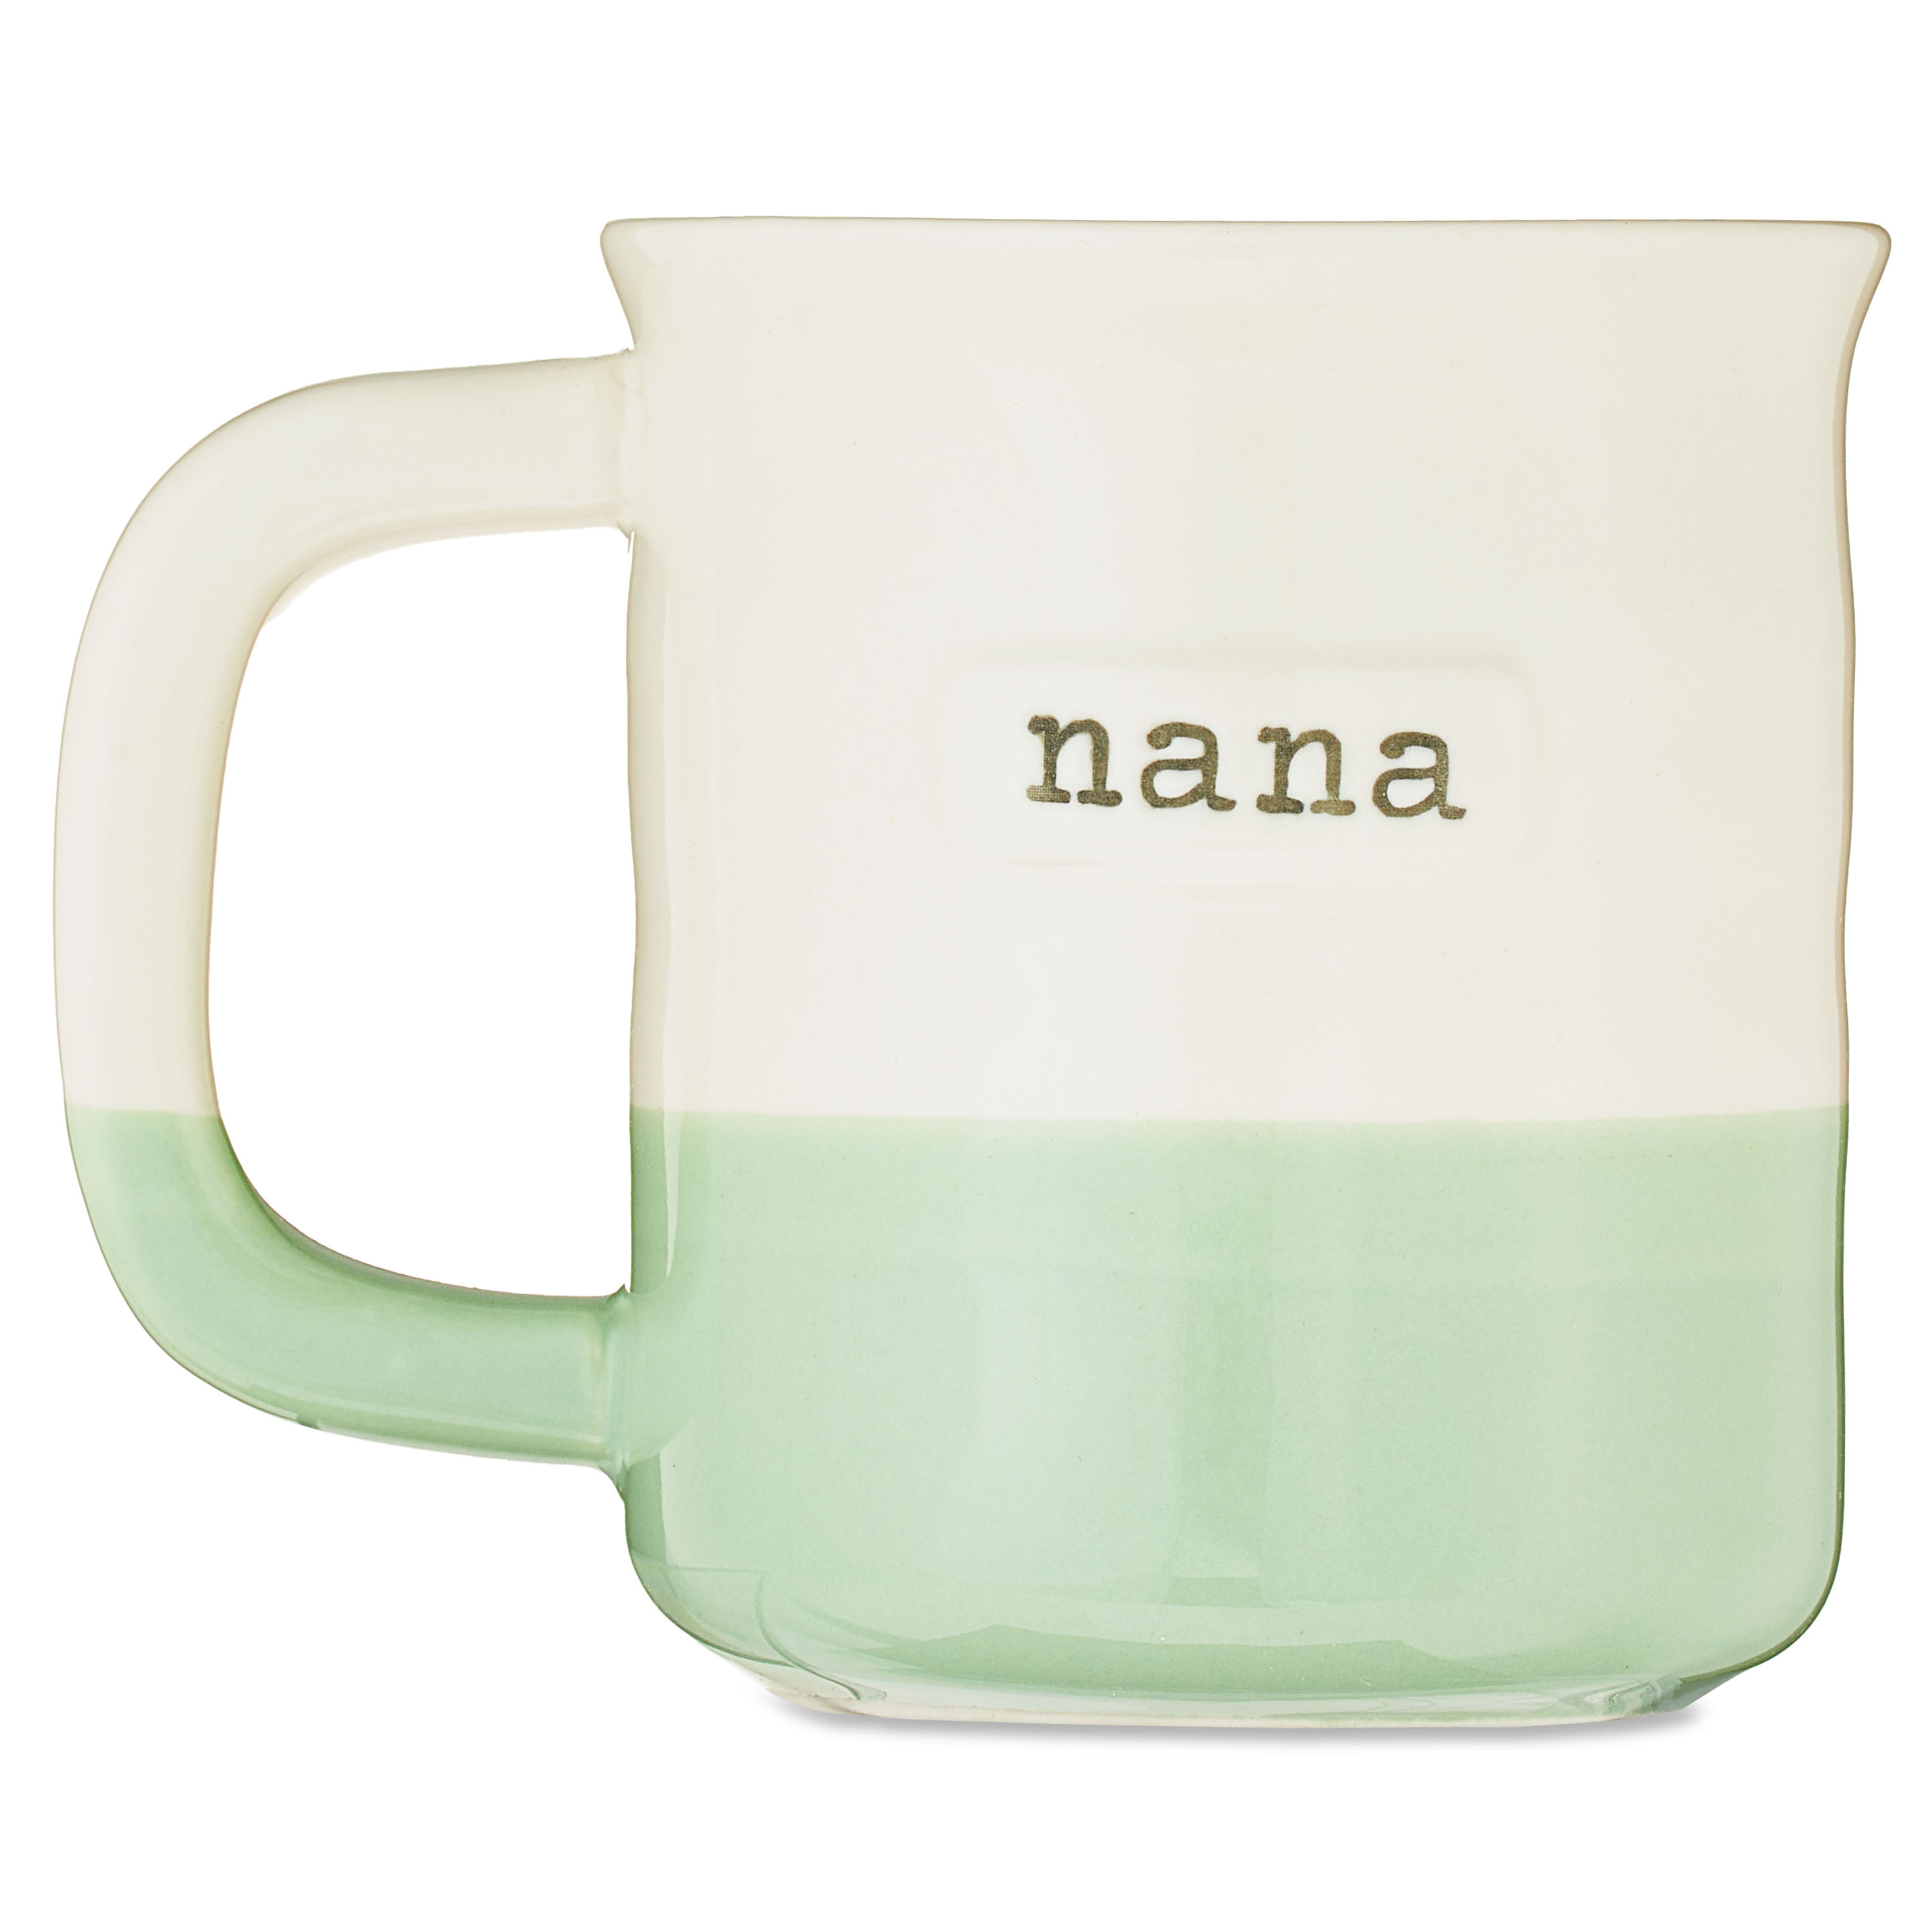 Mother's Day Mint Green & White Ceramic Mug, Nana-Way To Celebrate - image 1 of 7